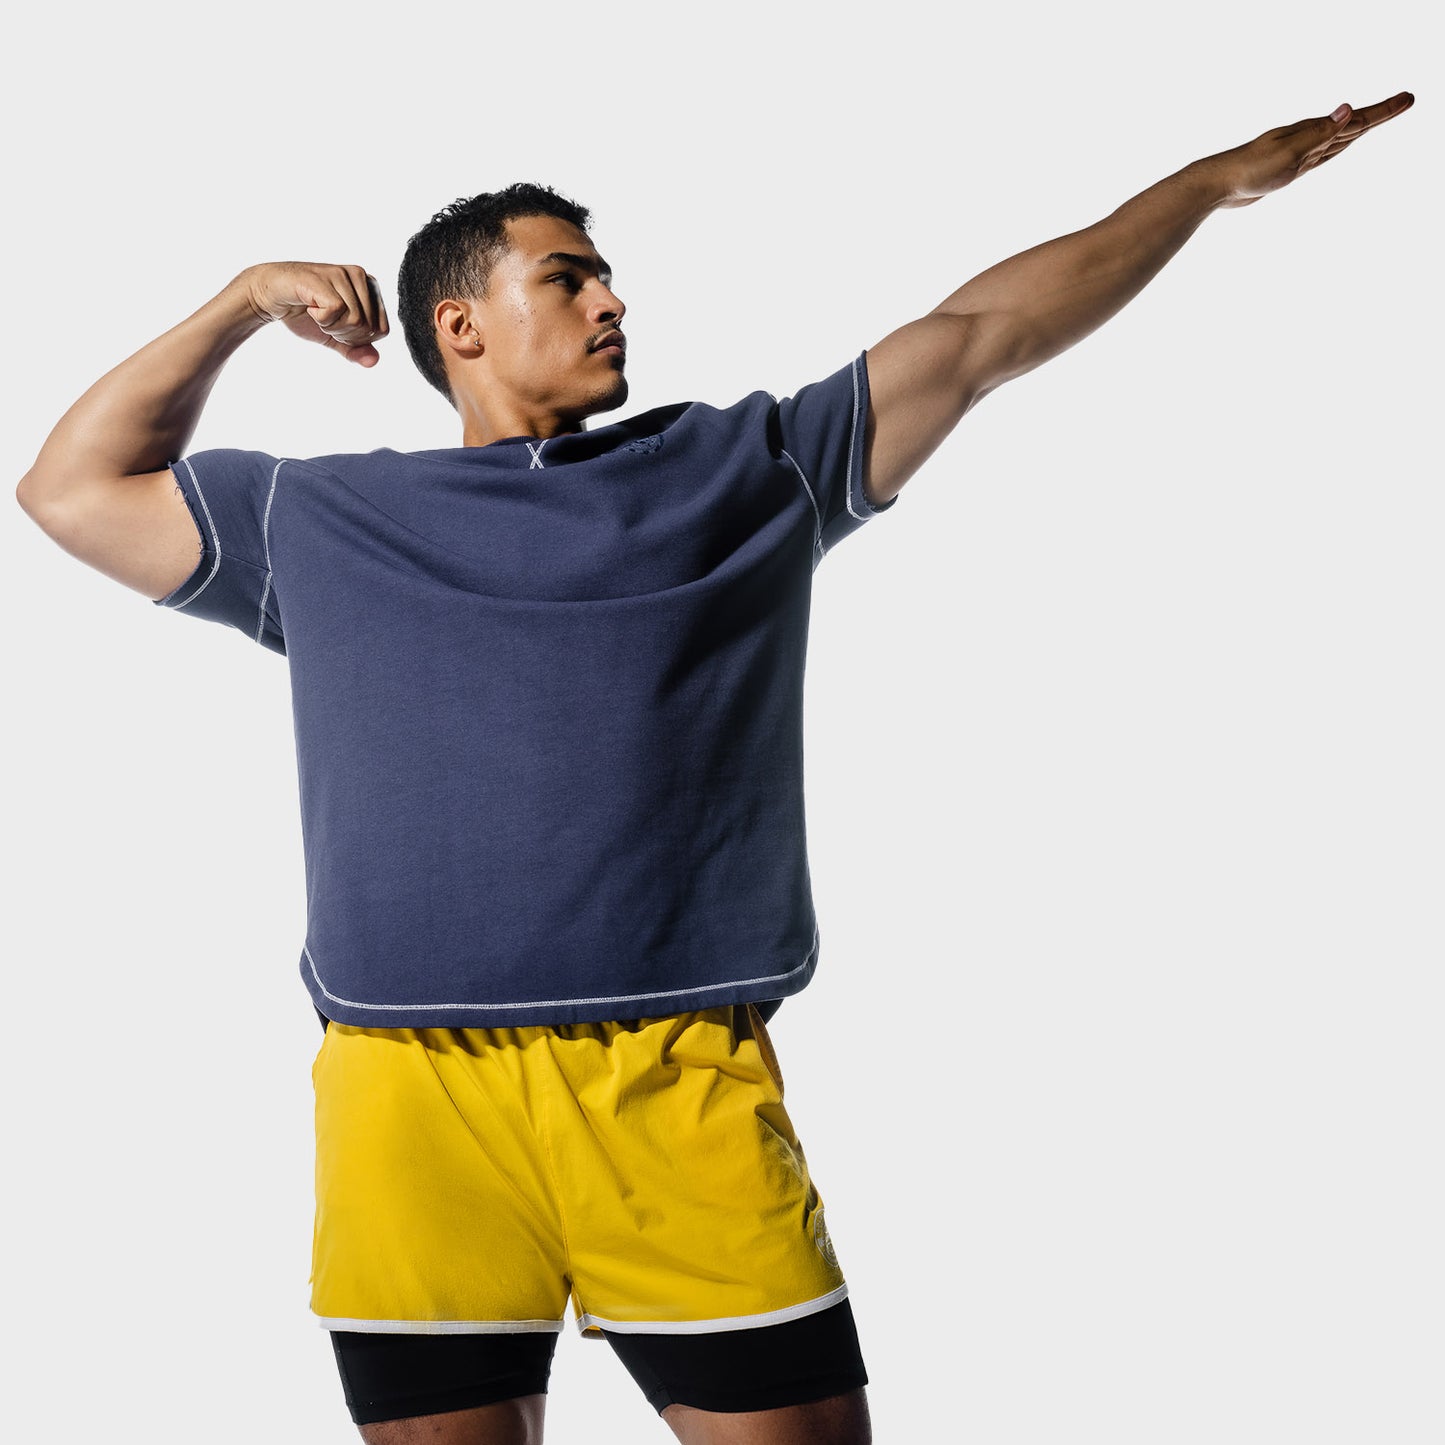 squatwolf-gym-t-shirts-golden-era-oversized-crew-t-shirt-patriot-blue-workout-clothes-for-men